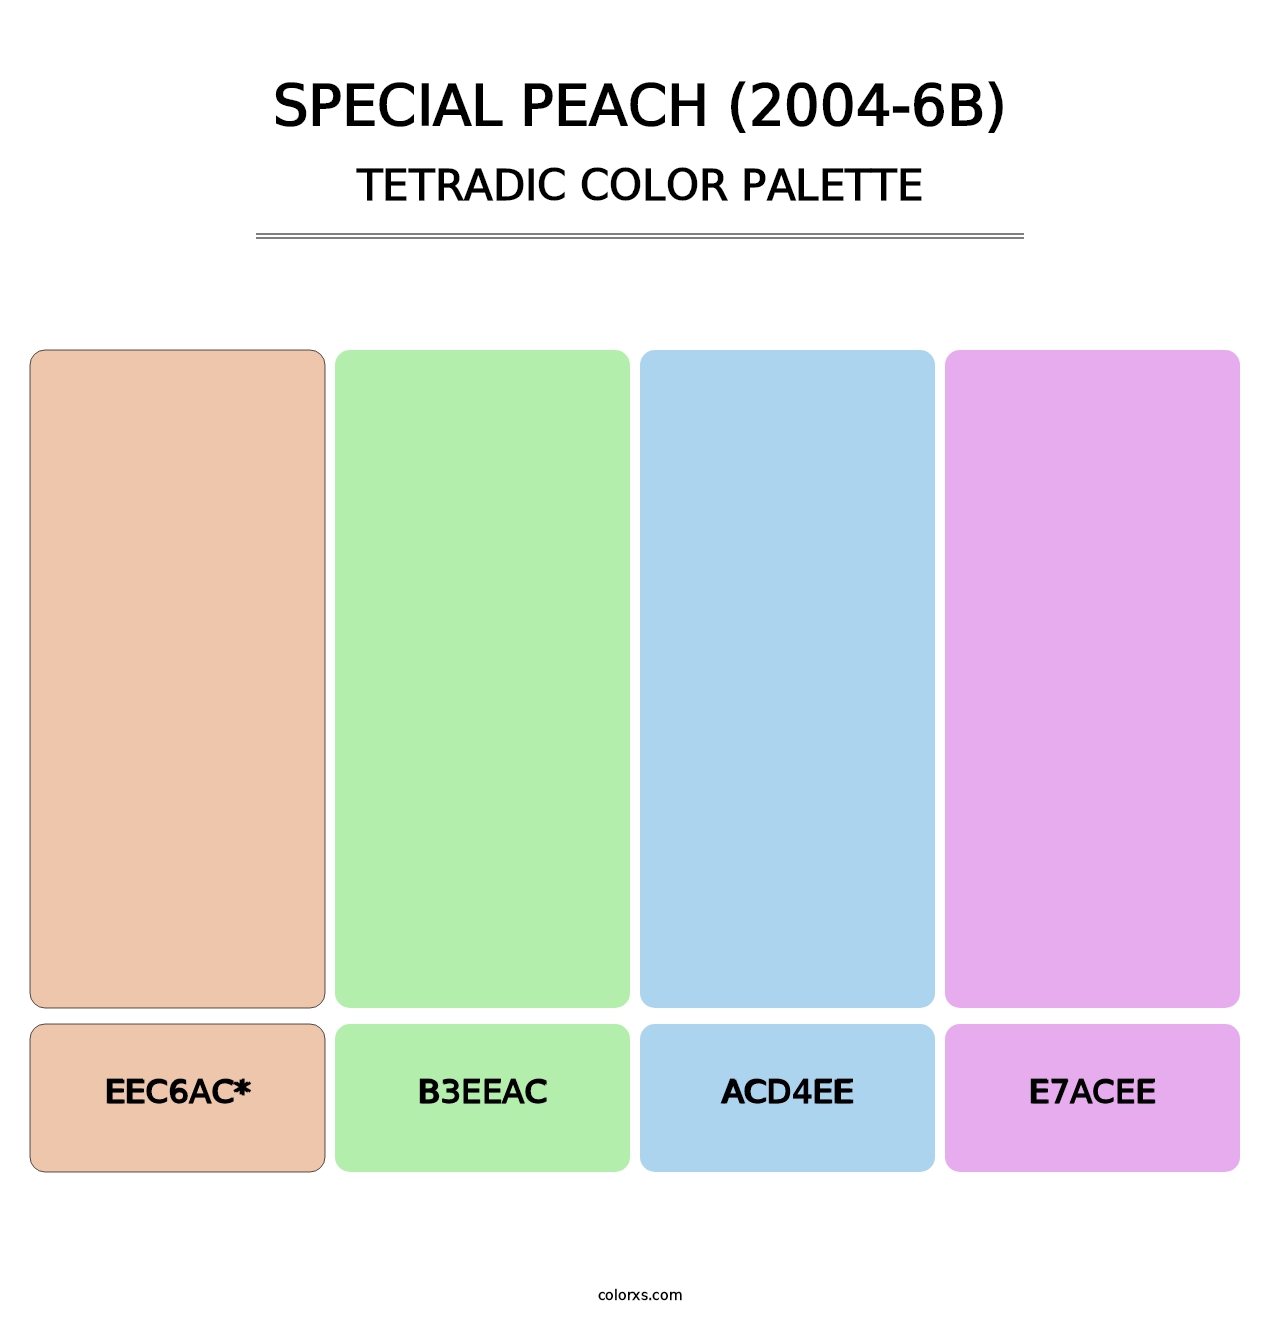 Special Peach (2004-6B) - Tetradic Color Palette